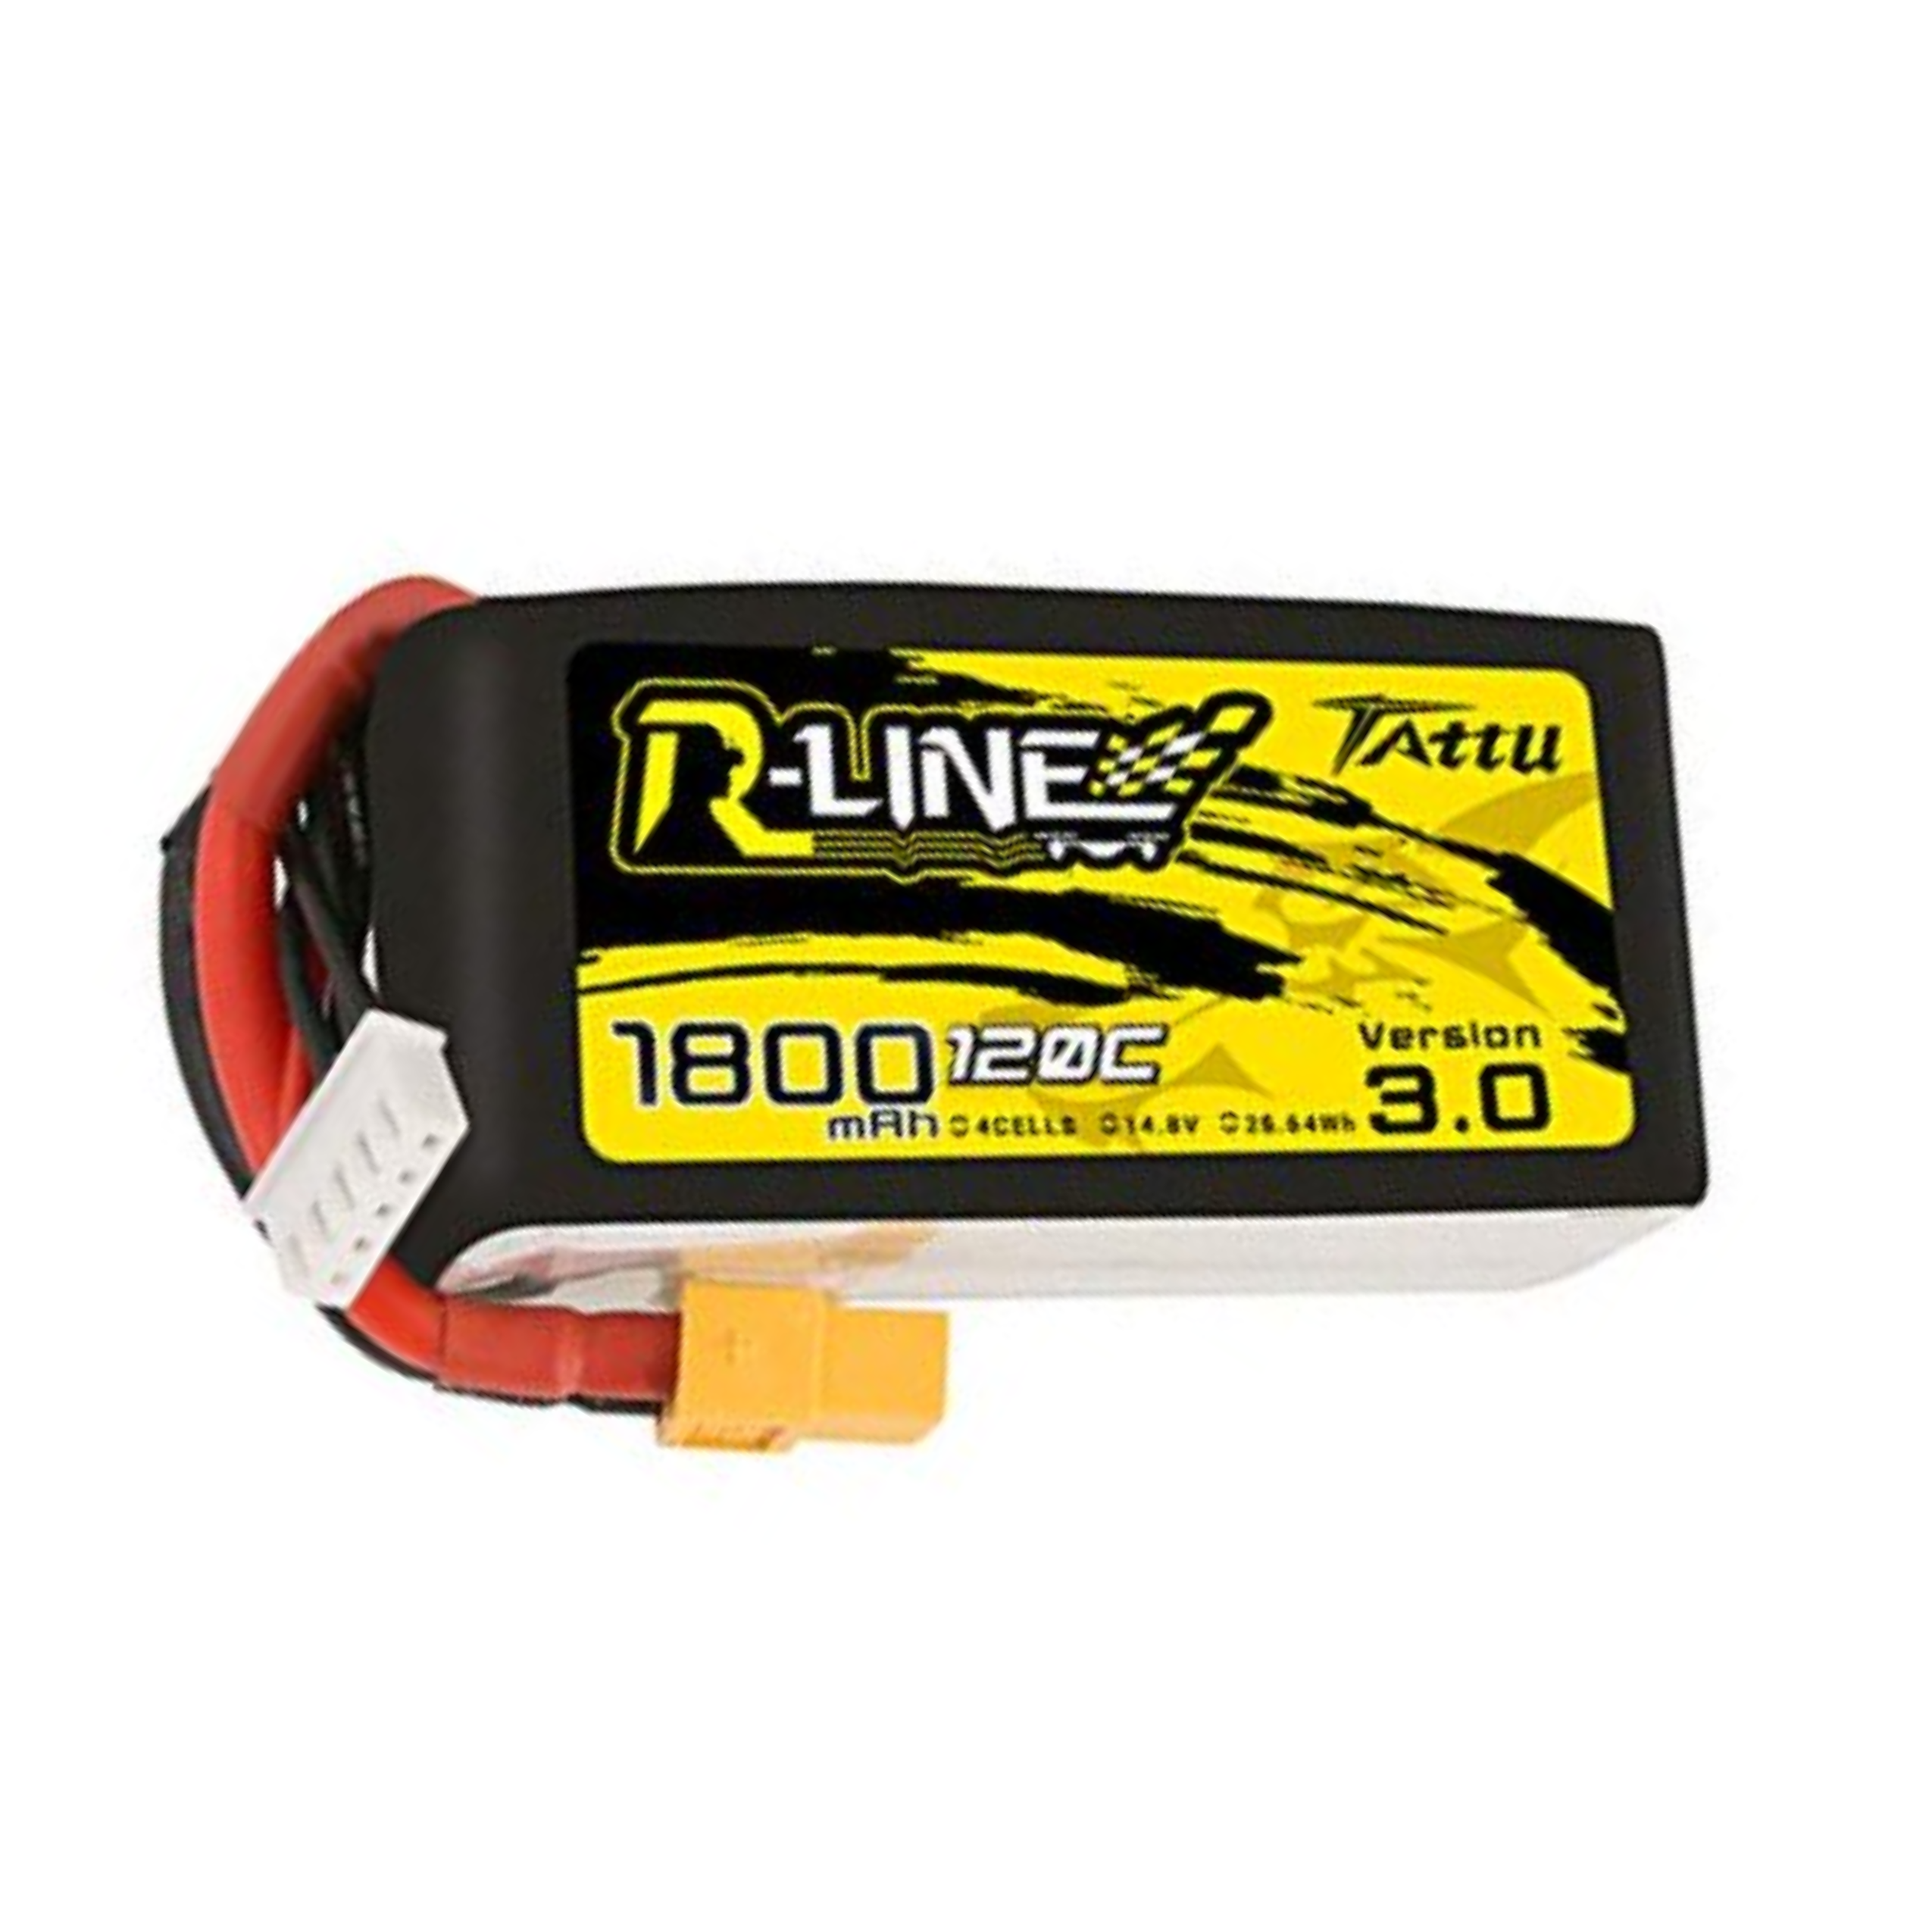 Tattu R-Line Version 3.0 1800mAh 14.8V 120C 4S1P Lipo Battery Pack with XT60 Plug - DroneLabs.ca